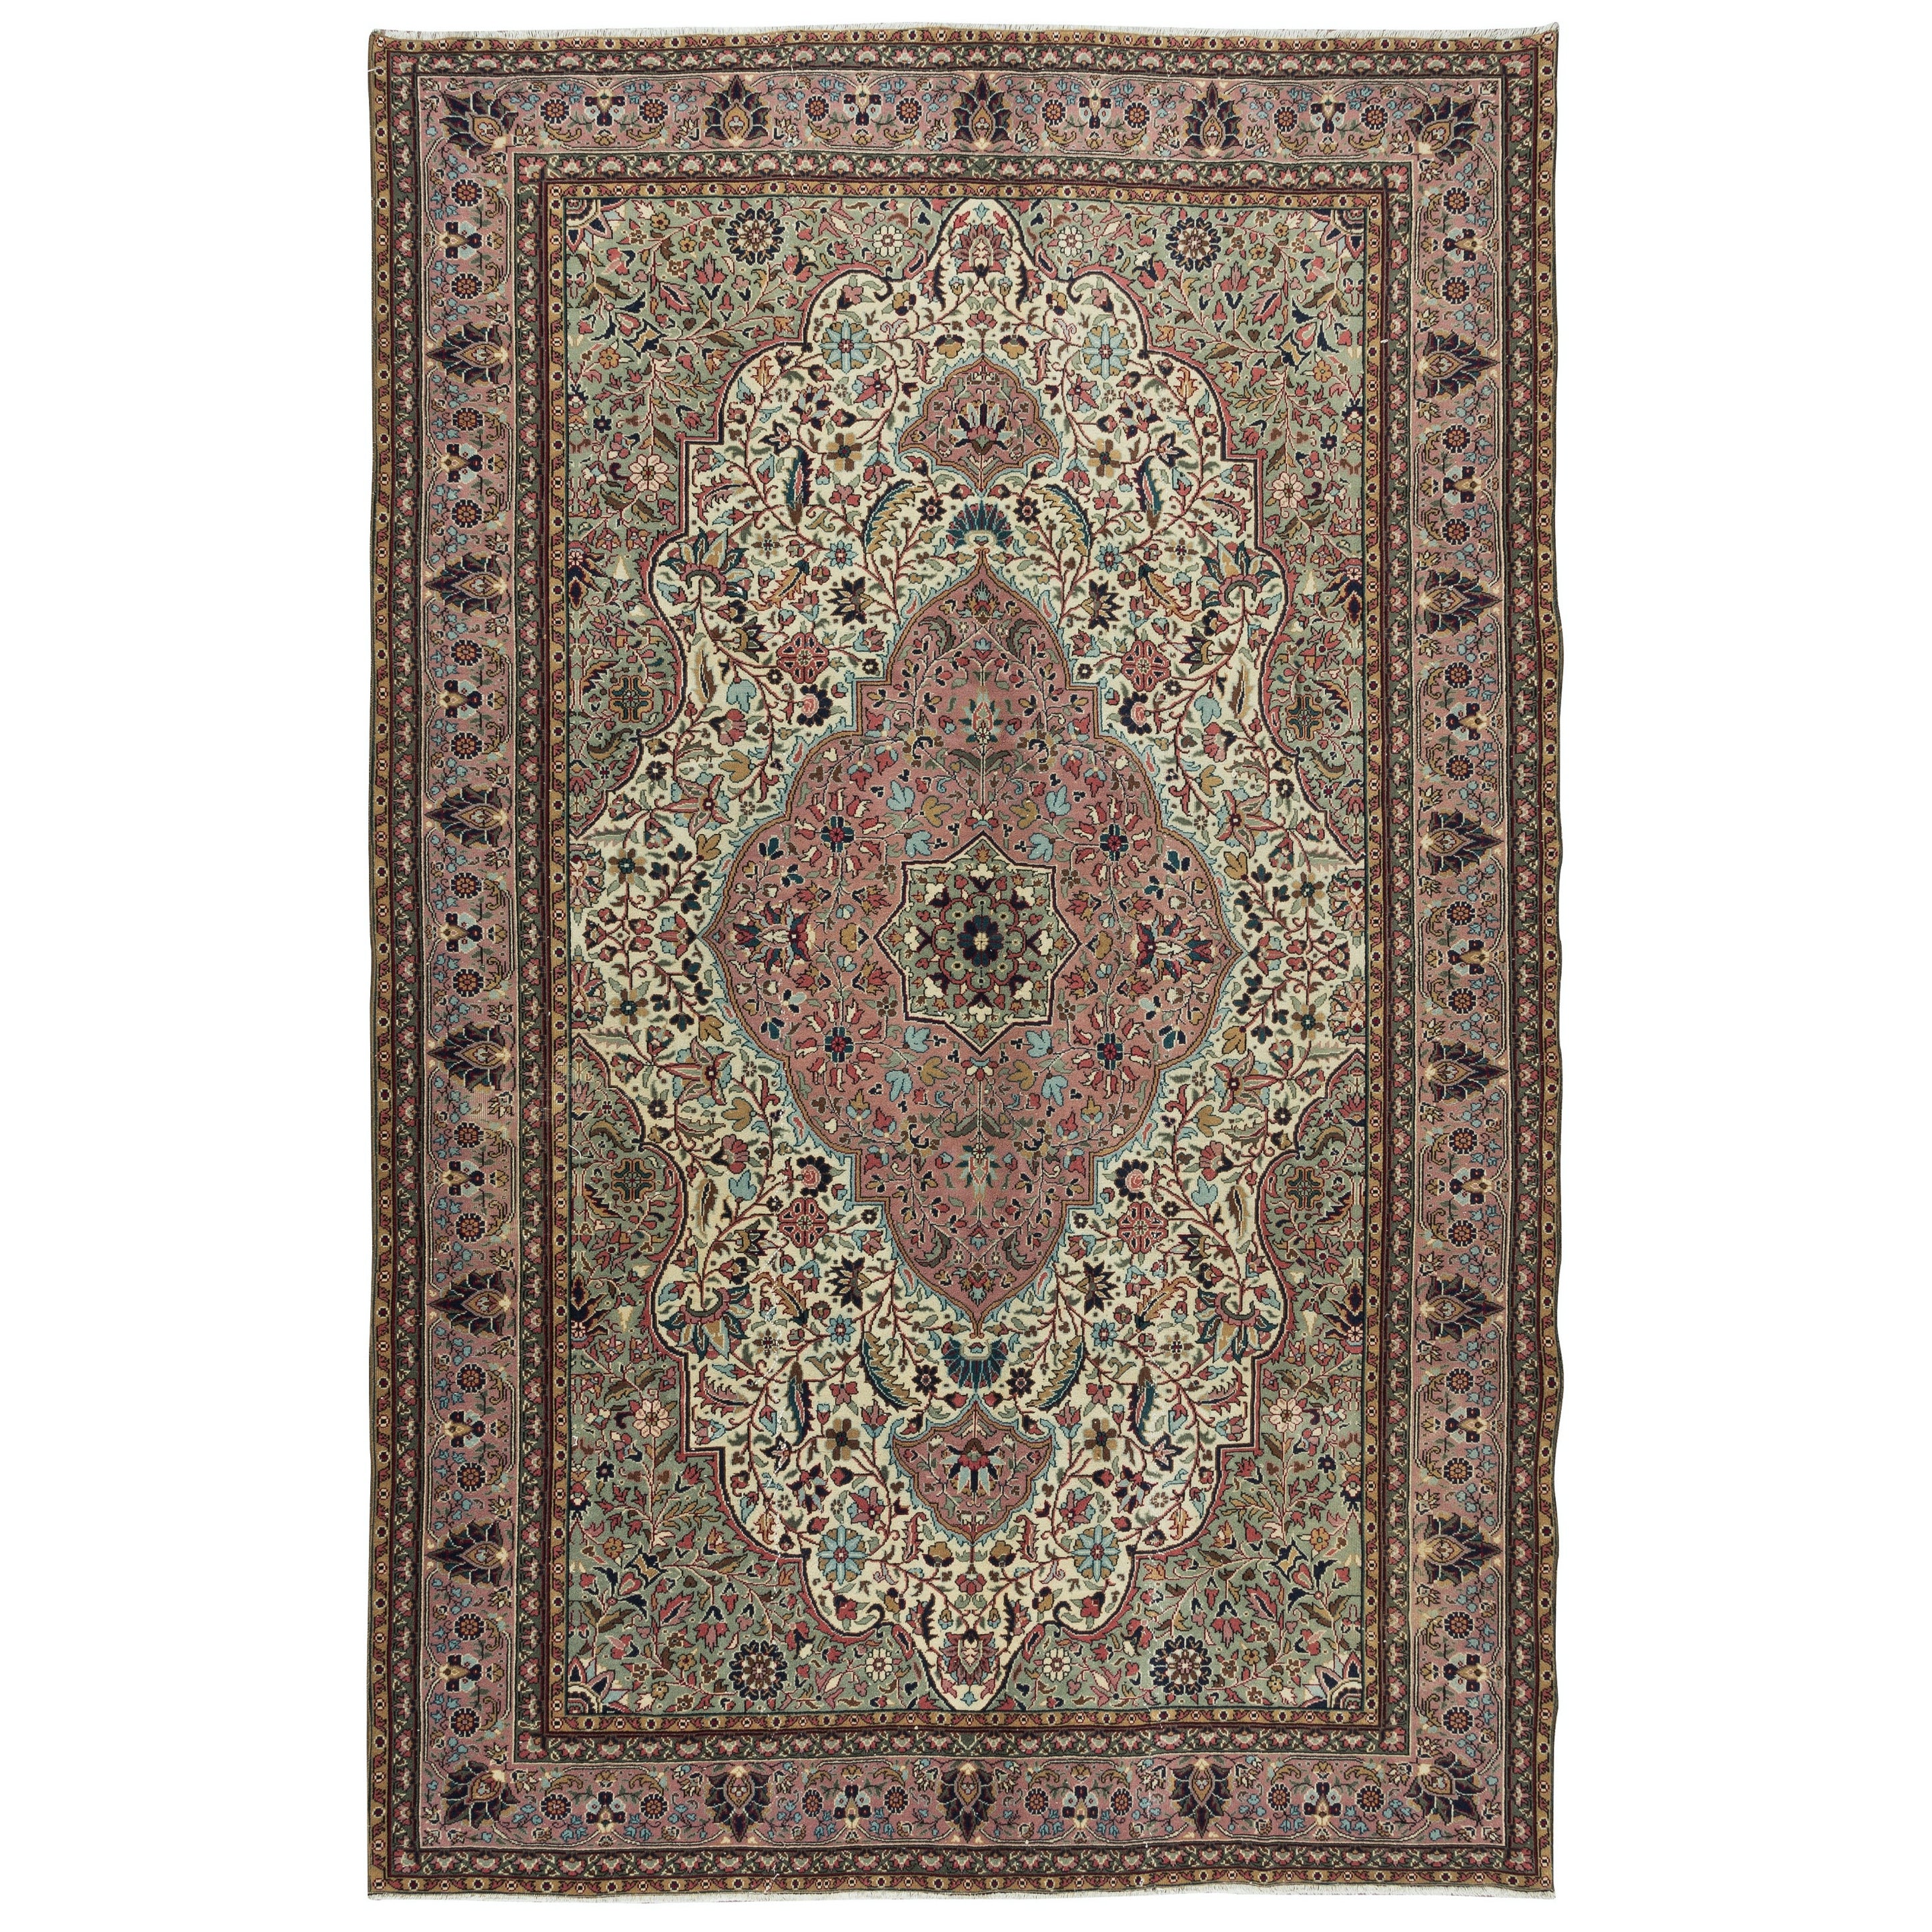 6.4x10.2 Ft One of a Pair Handmade Turkish Area Rug, Vintage Decorative Carpet